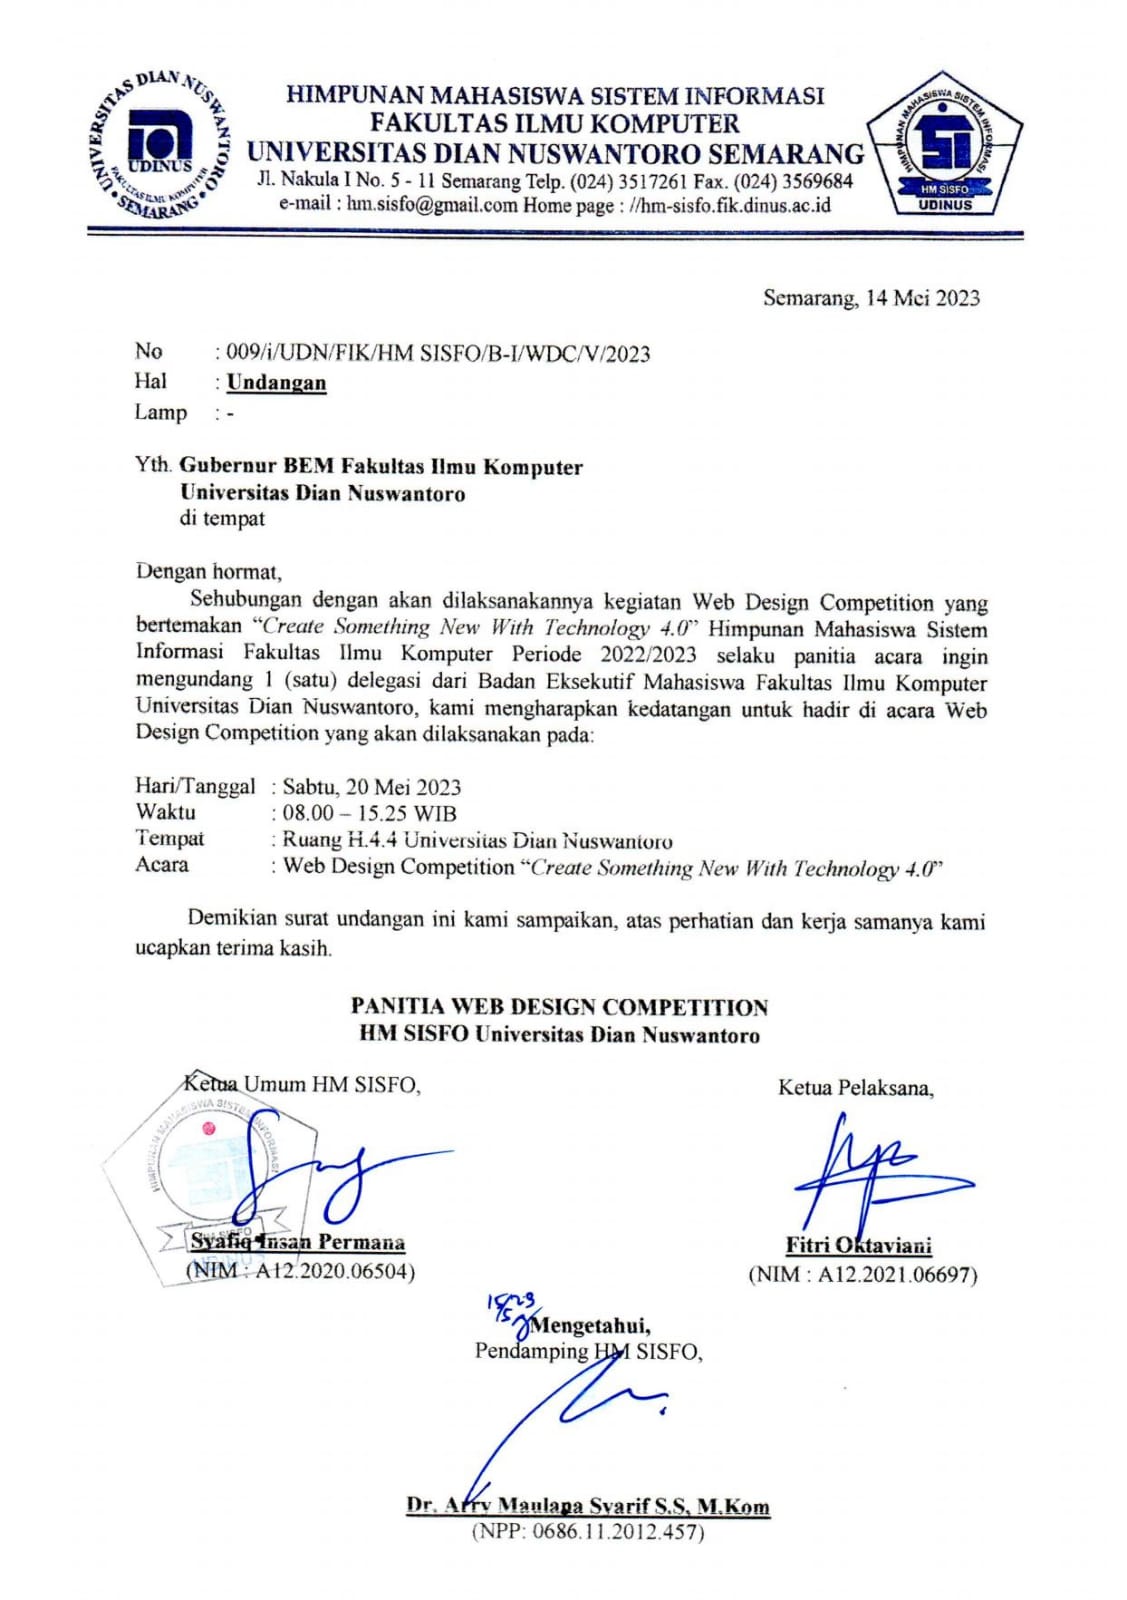 Surat Undangan Delegasi Badan Eksekutif Mahasiswa Fakultas Ilmu Komputer Universitas Dian Nuswantoro